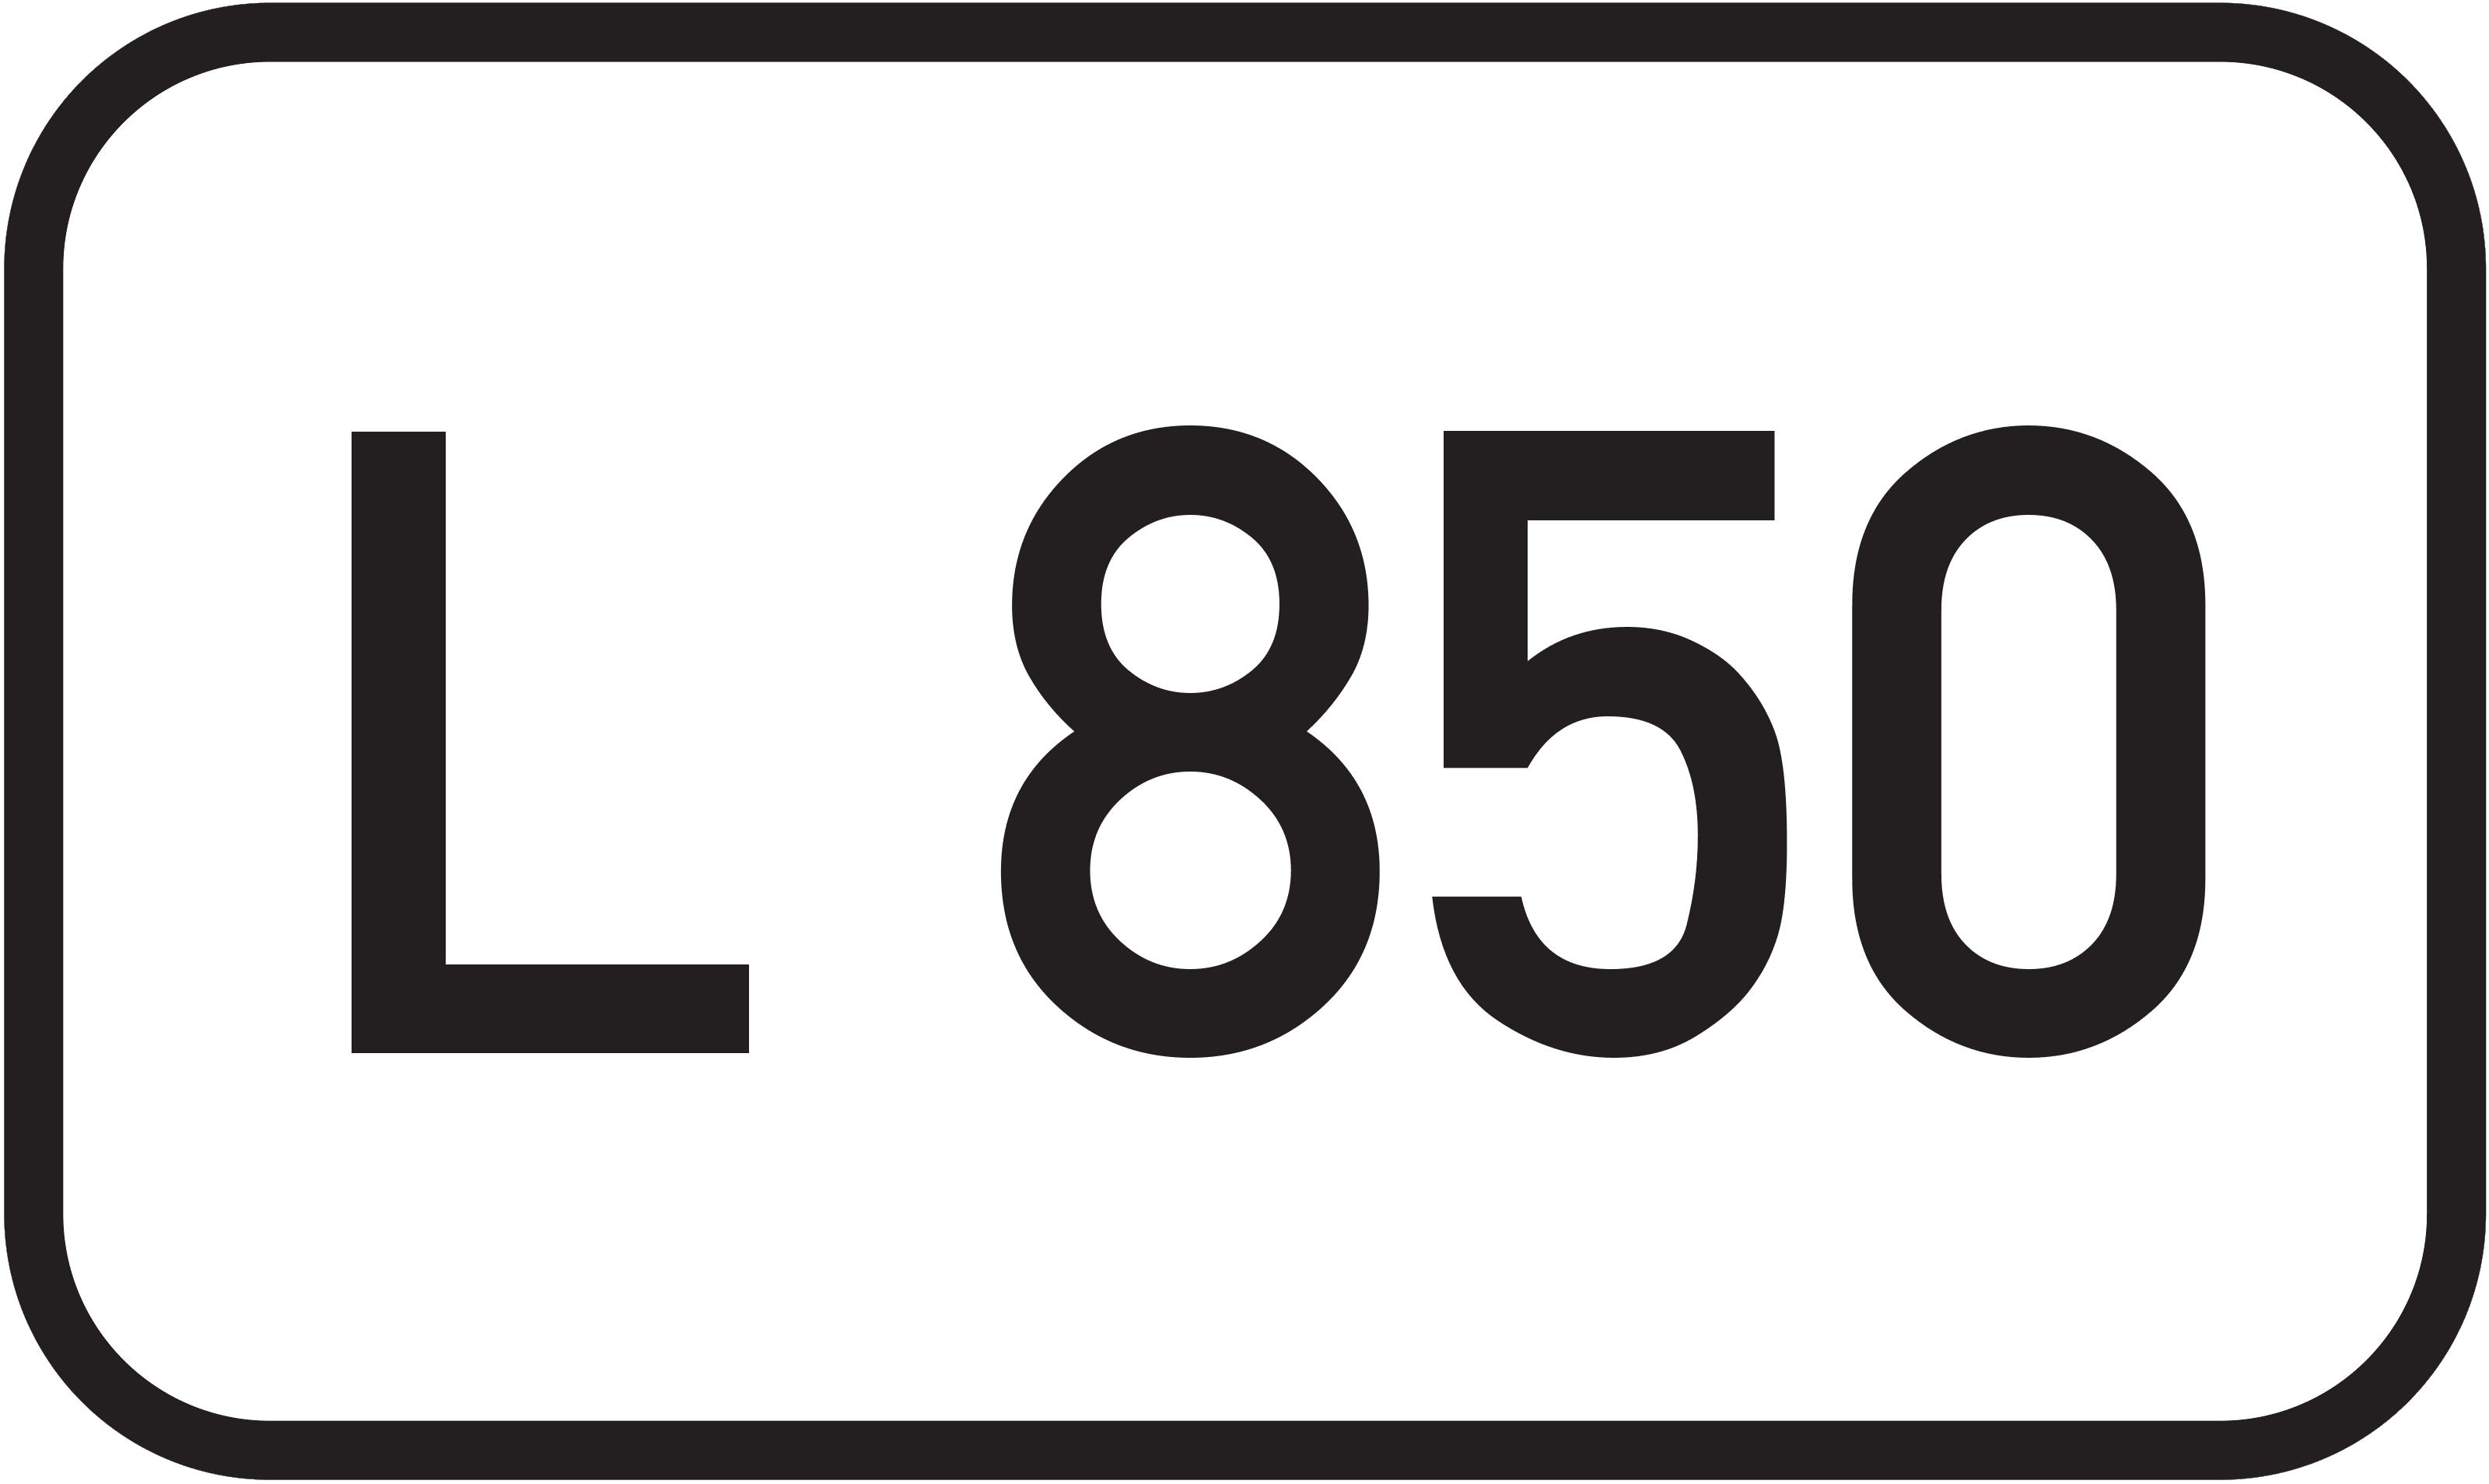 Straßenschild Landesstraße L 850